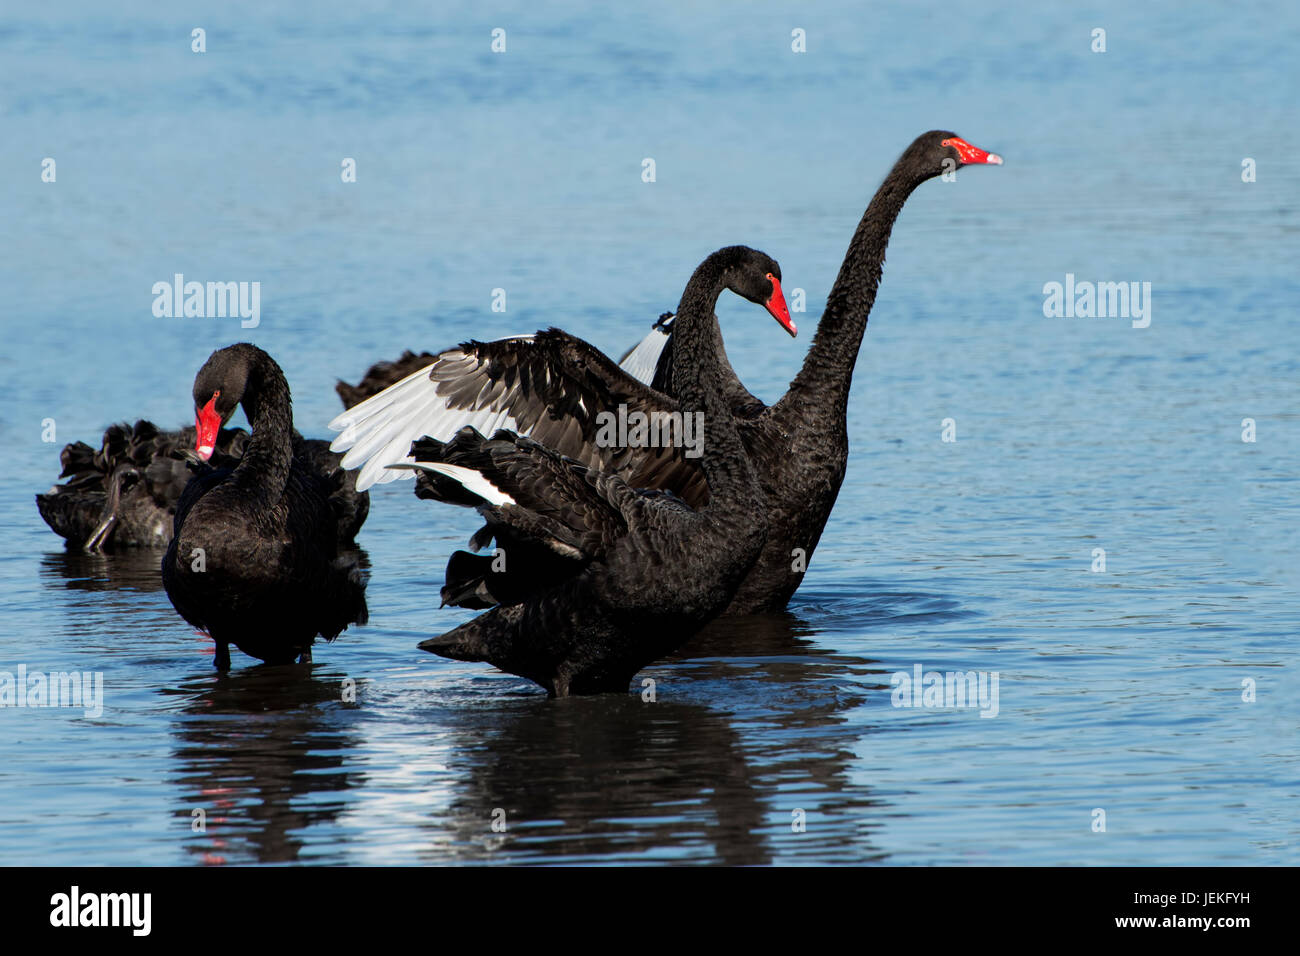 Black swans in a lake, Australia Stock Photo